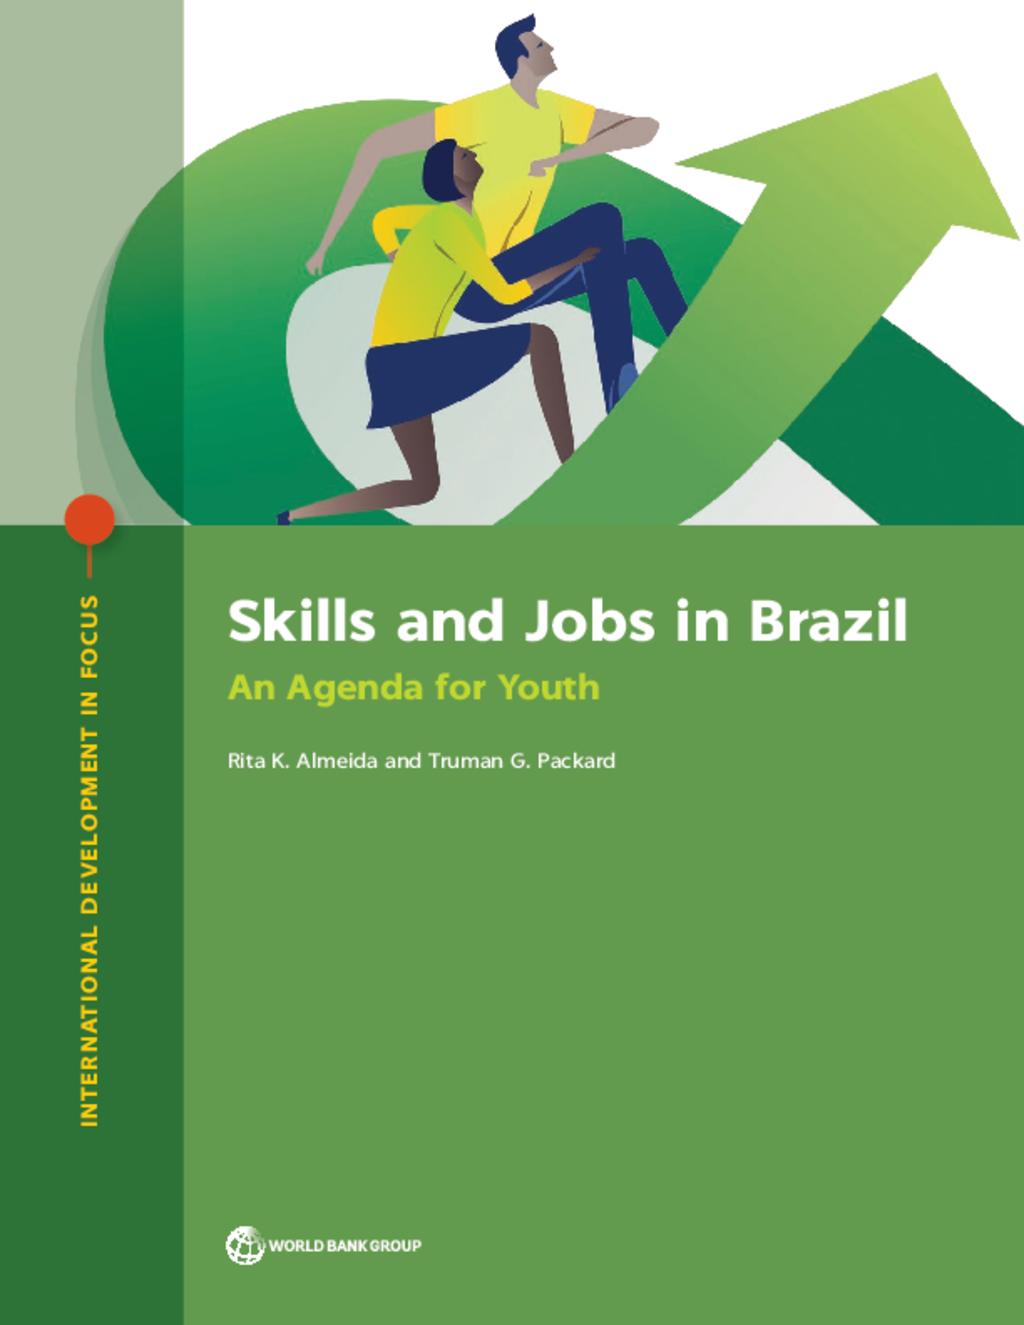 Skill Development in Brazil